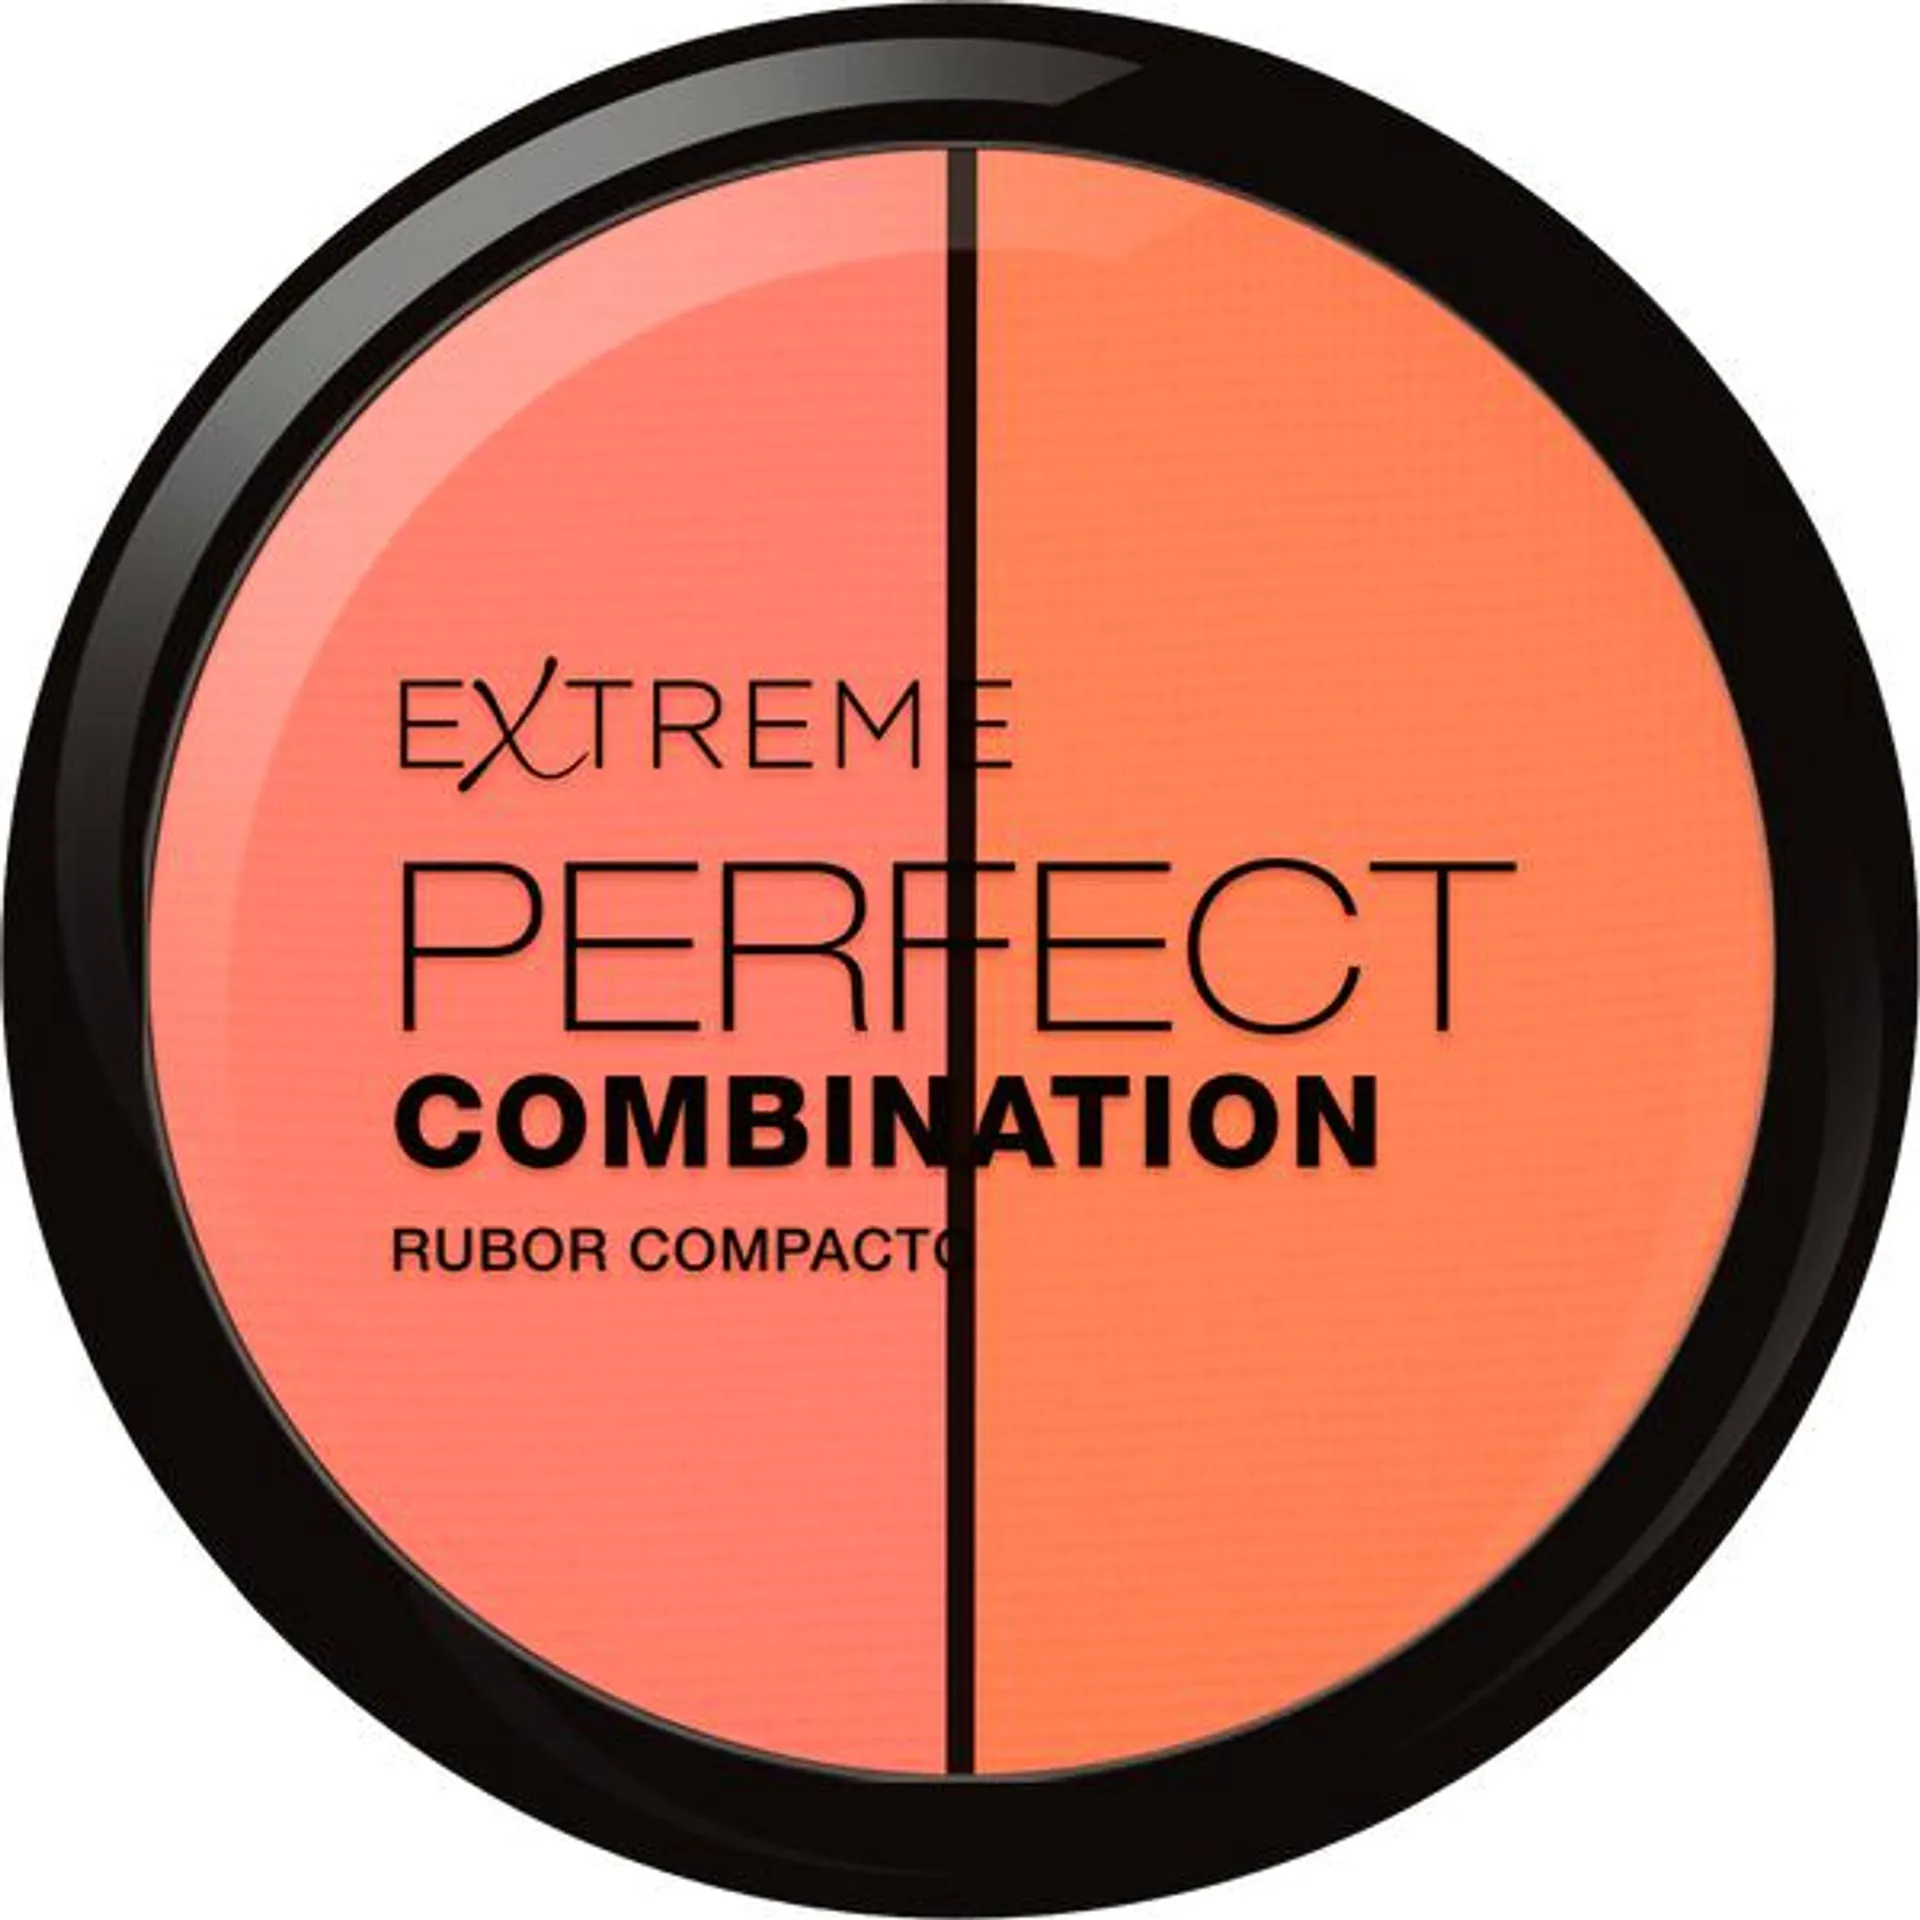 Rubor compacto Extreme Perfect Combination x 6 gr